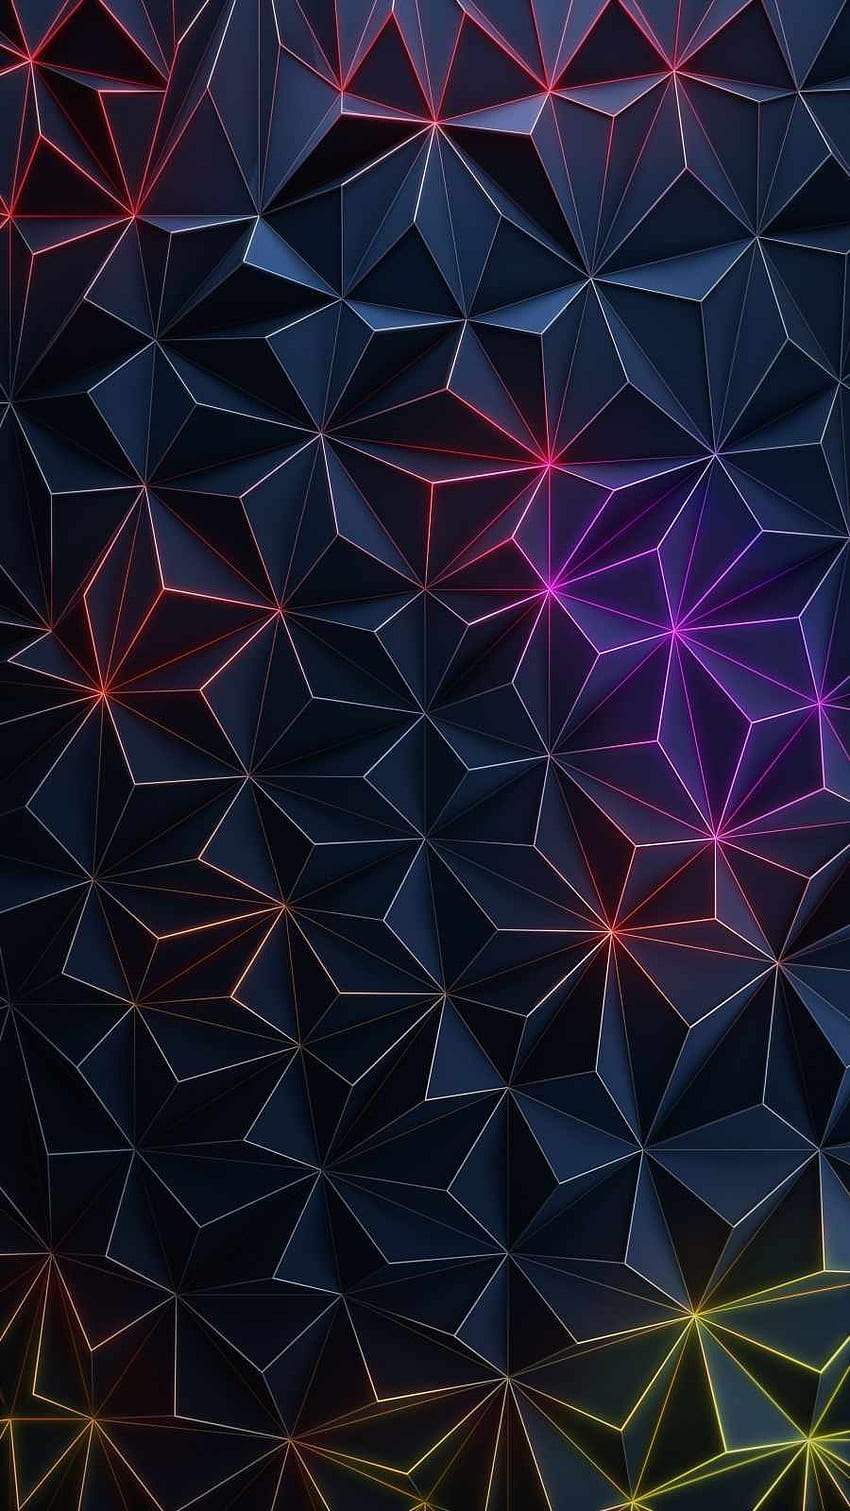 3D Geometric Neon IPhone Wallpaper  IPhone Wallpapers  iPhone Wallpapers